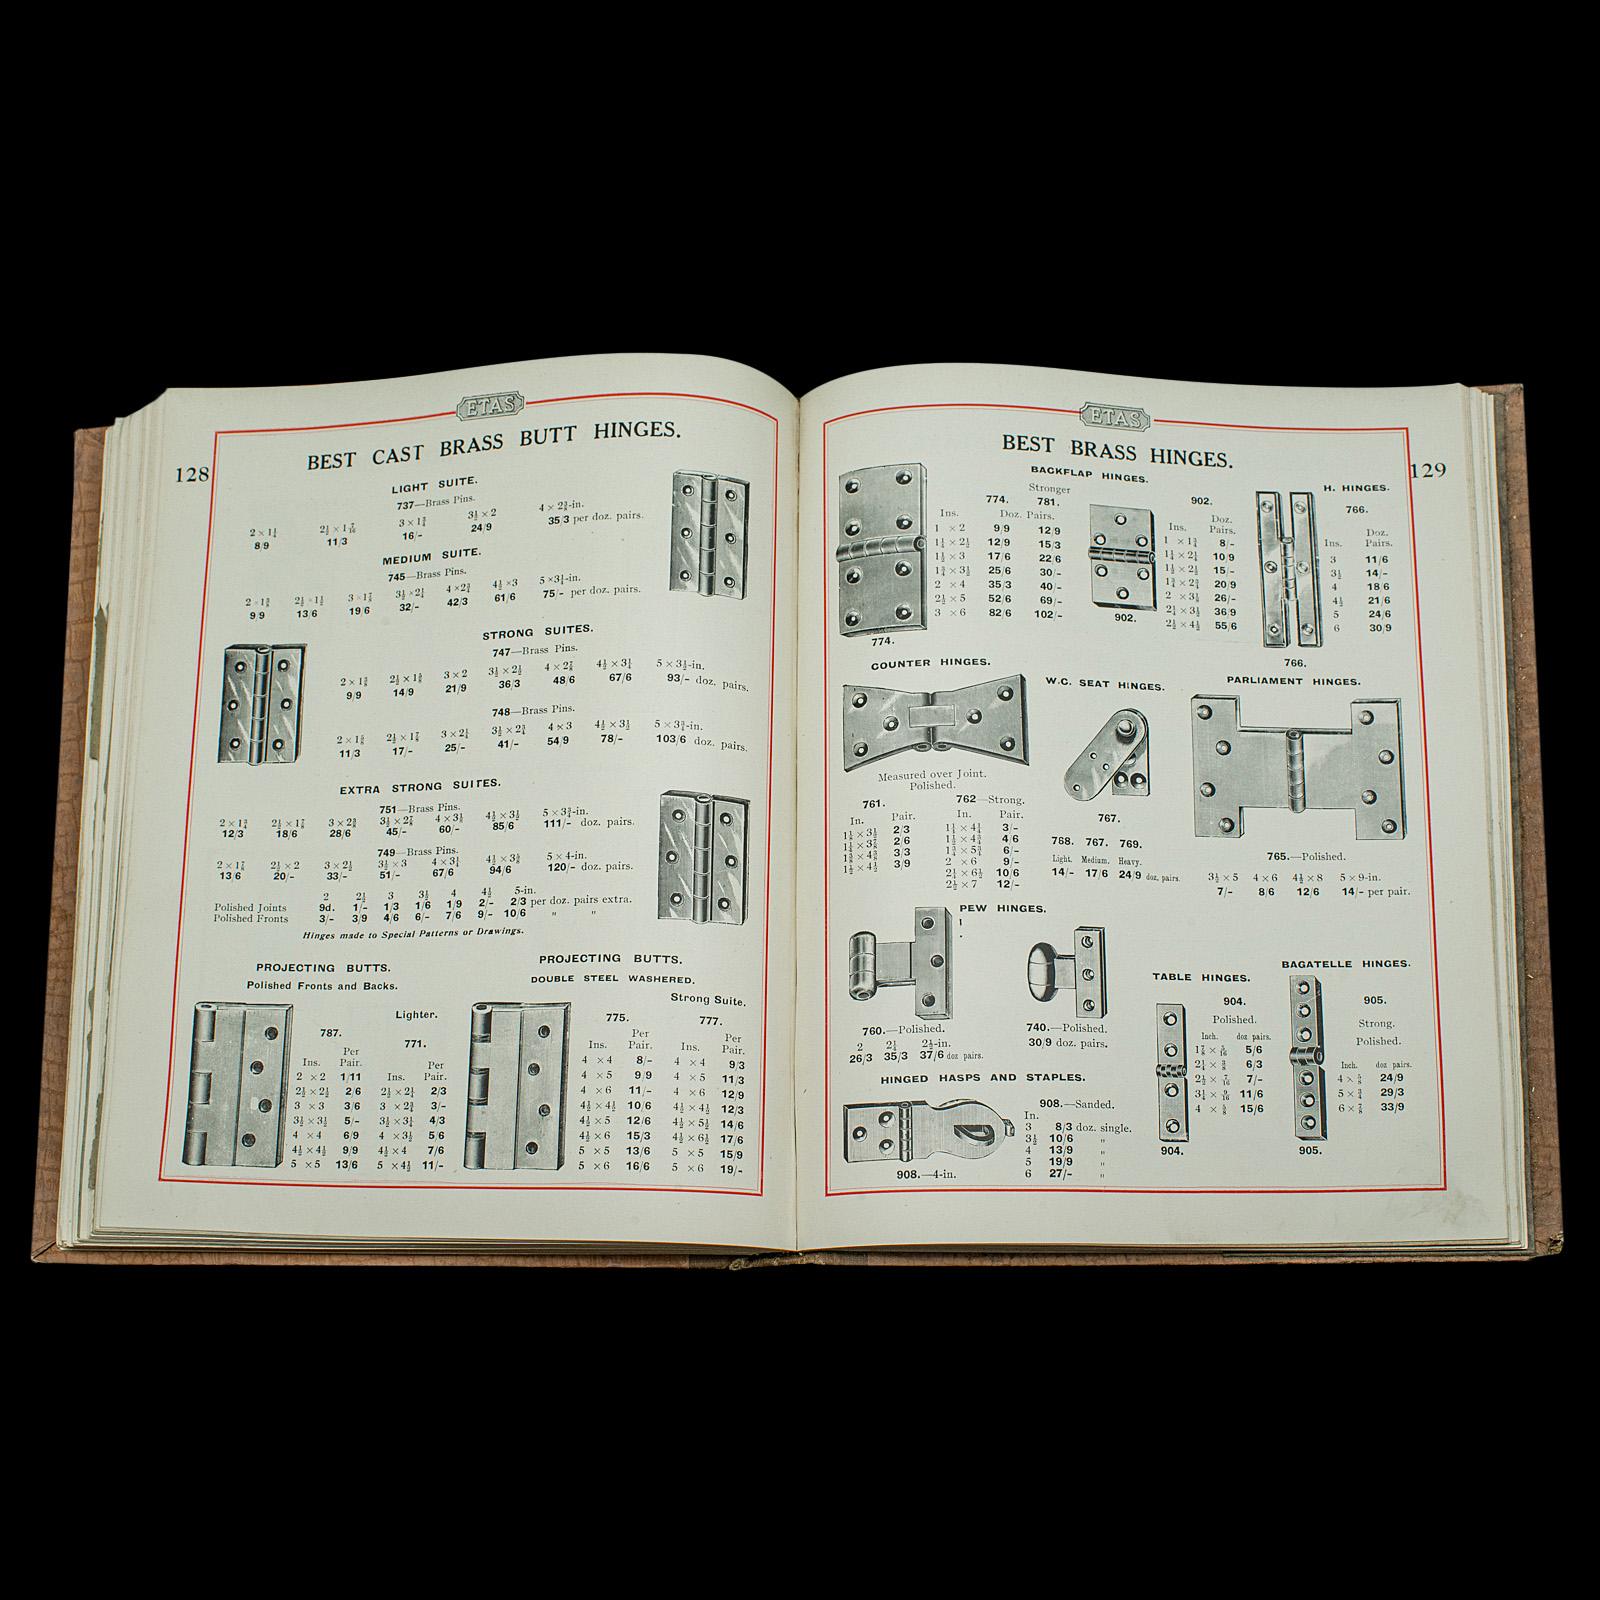 Vintage ETAS Lock Catalogue, English, Illustrated, Trade Directory, Circa 1930 For Sale 3